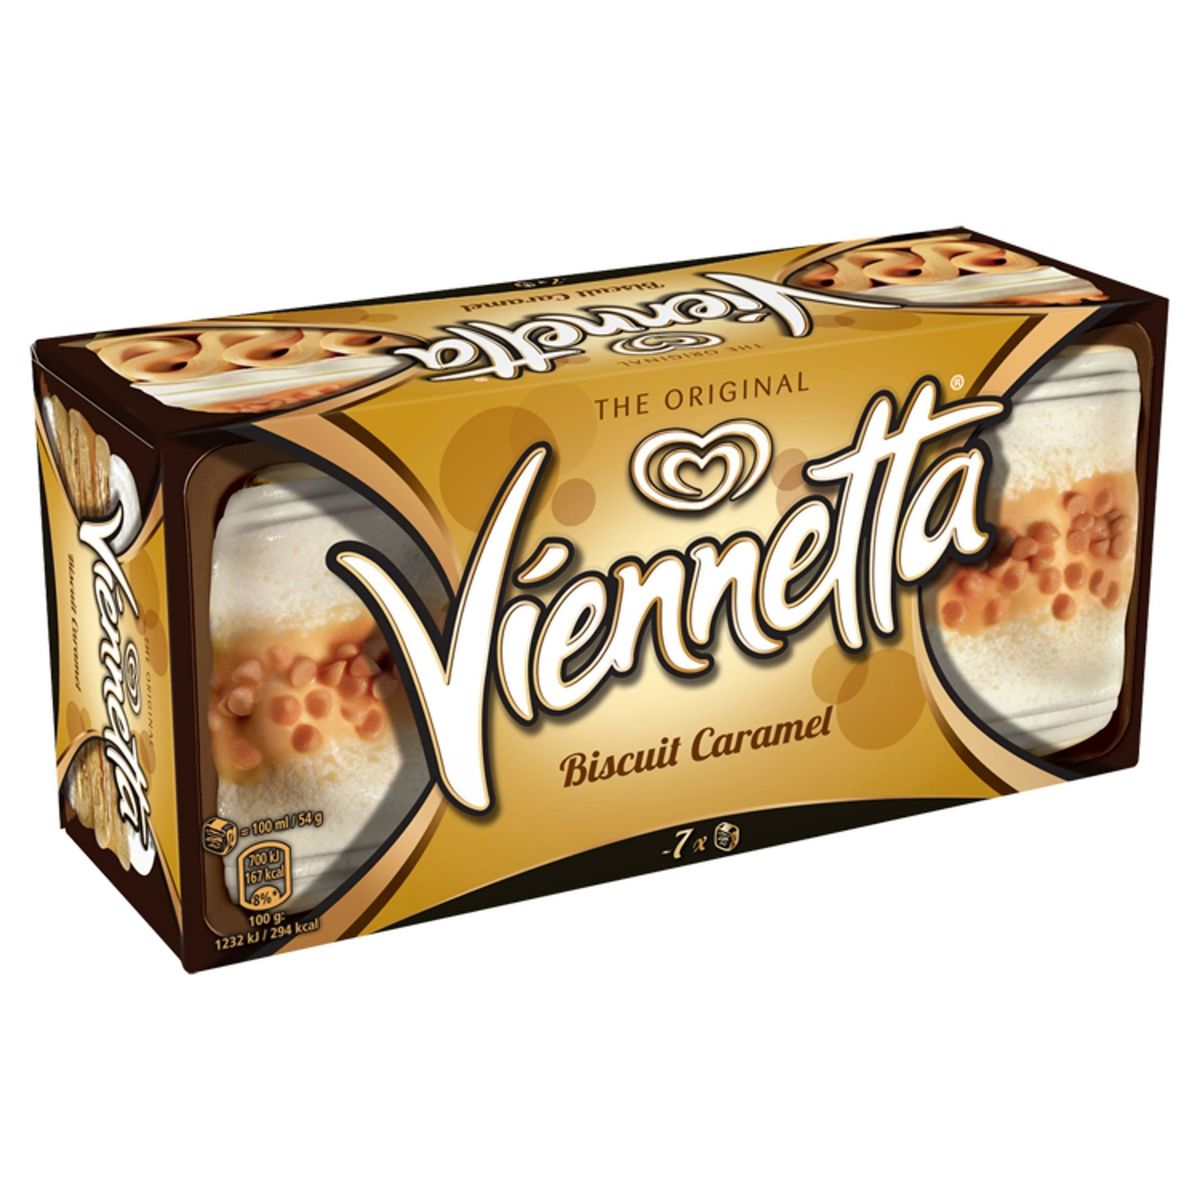 Viennetta Ola Ijsstronk Ijs Biscuit Caramel 0.65 L